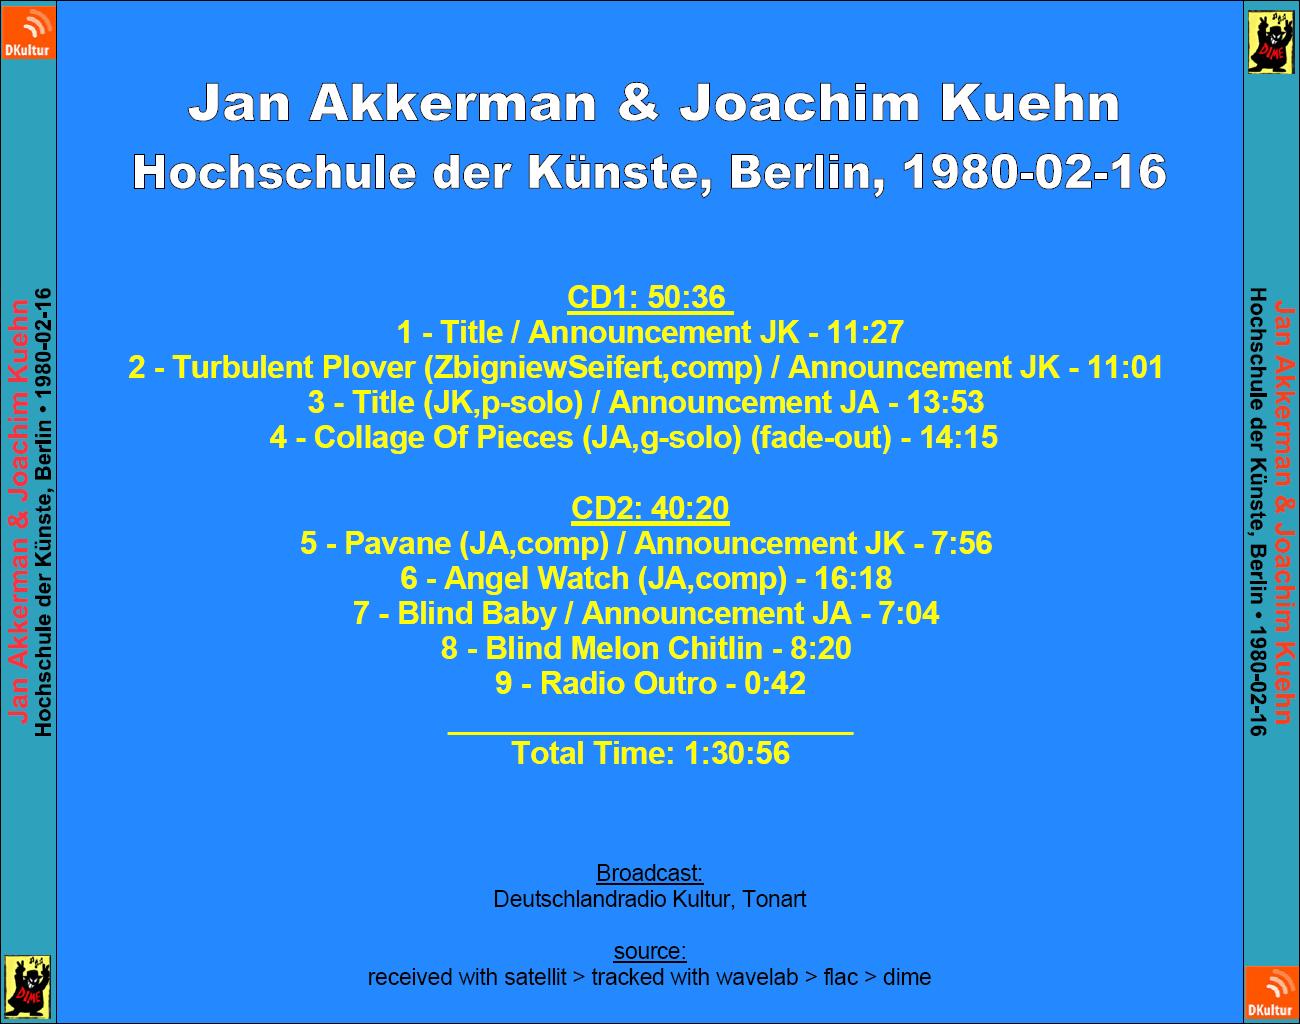 JoachimKuehnJanAkkerman1980-02-16HochschuleDerKuensteBerlinGermany (5).png